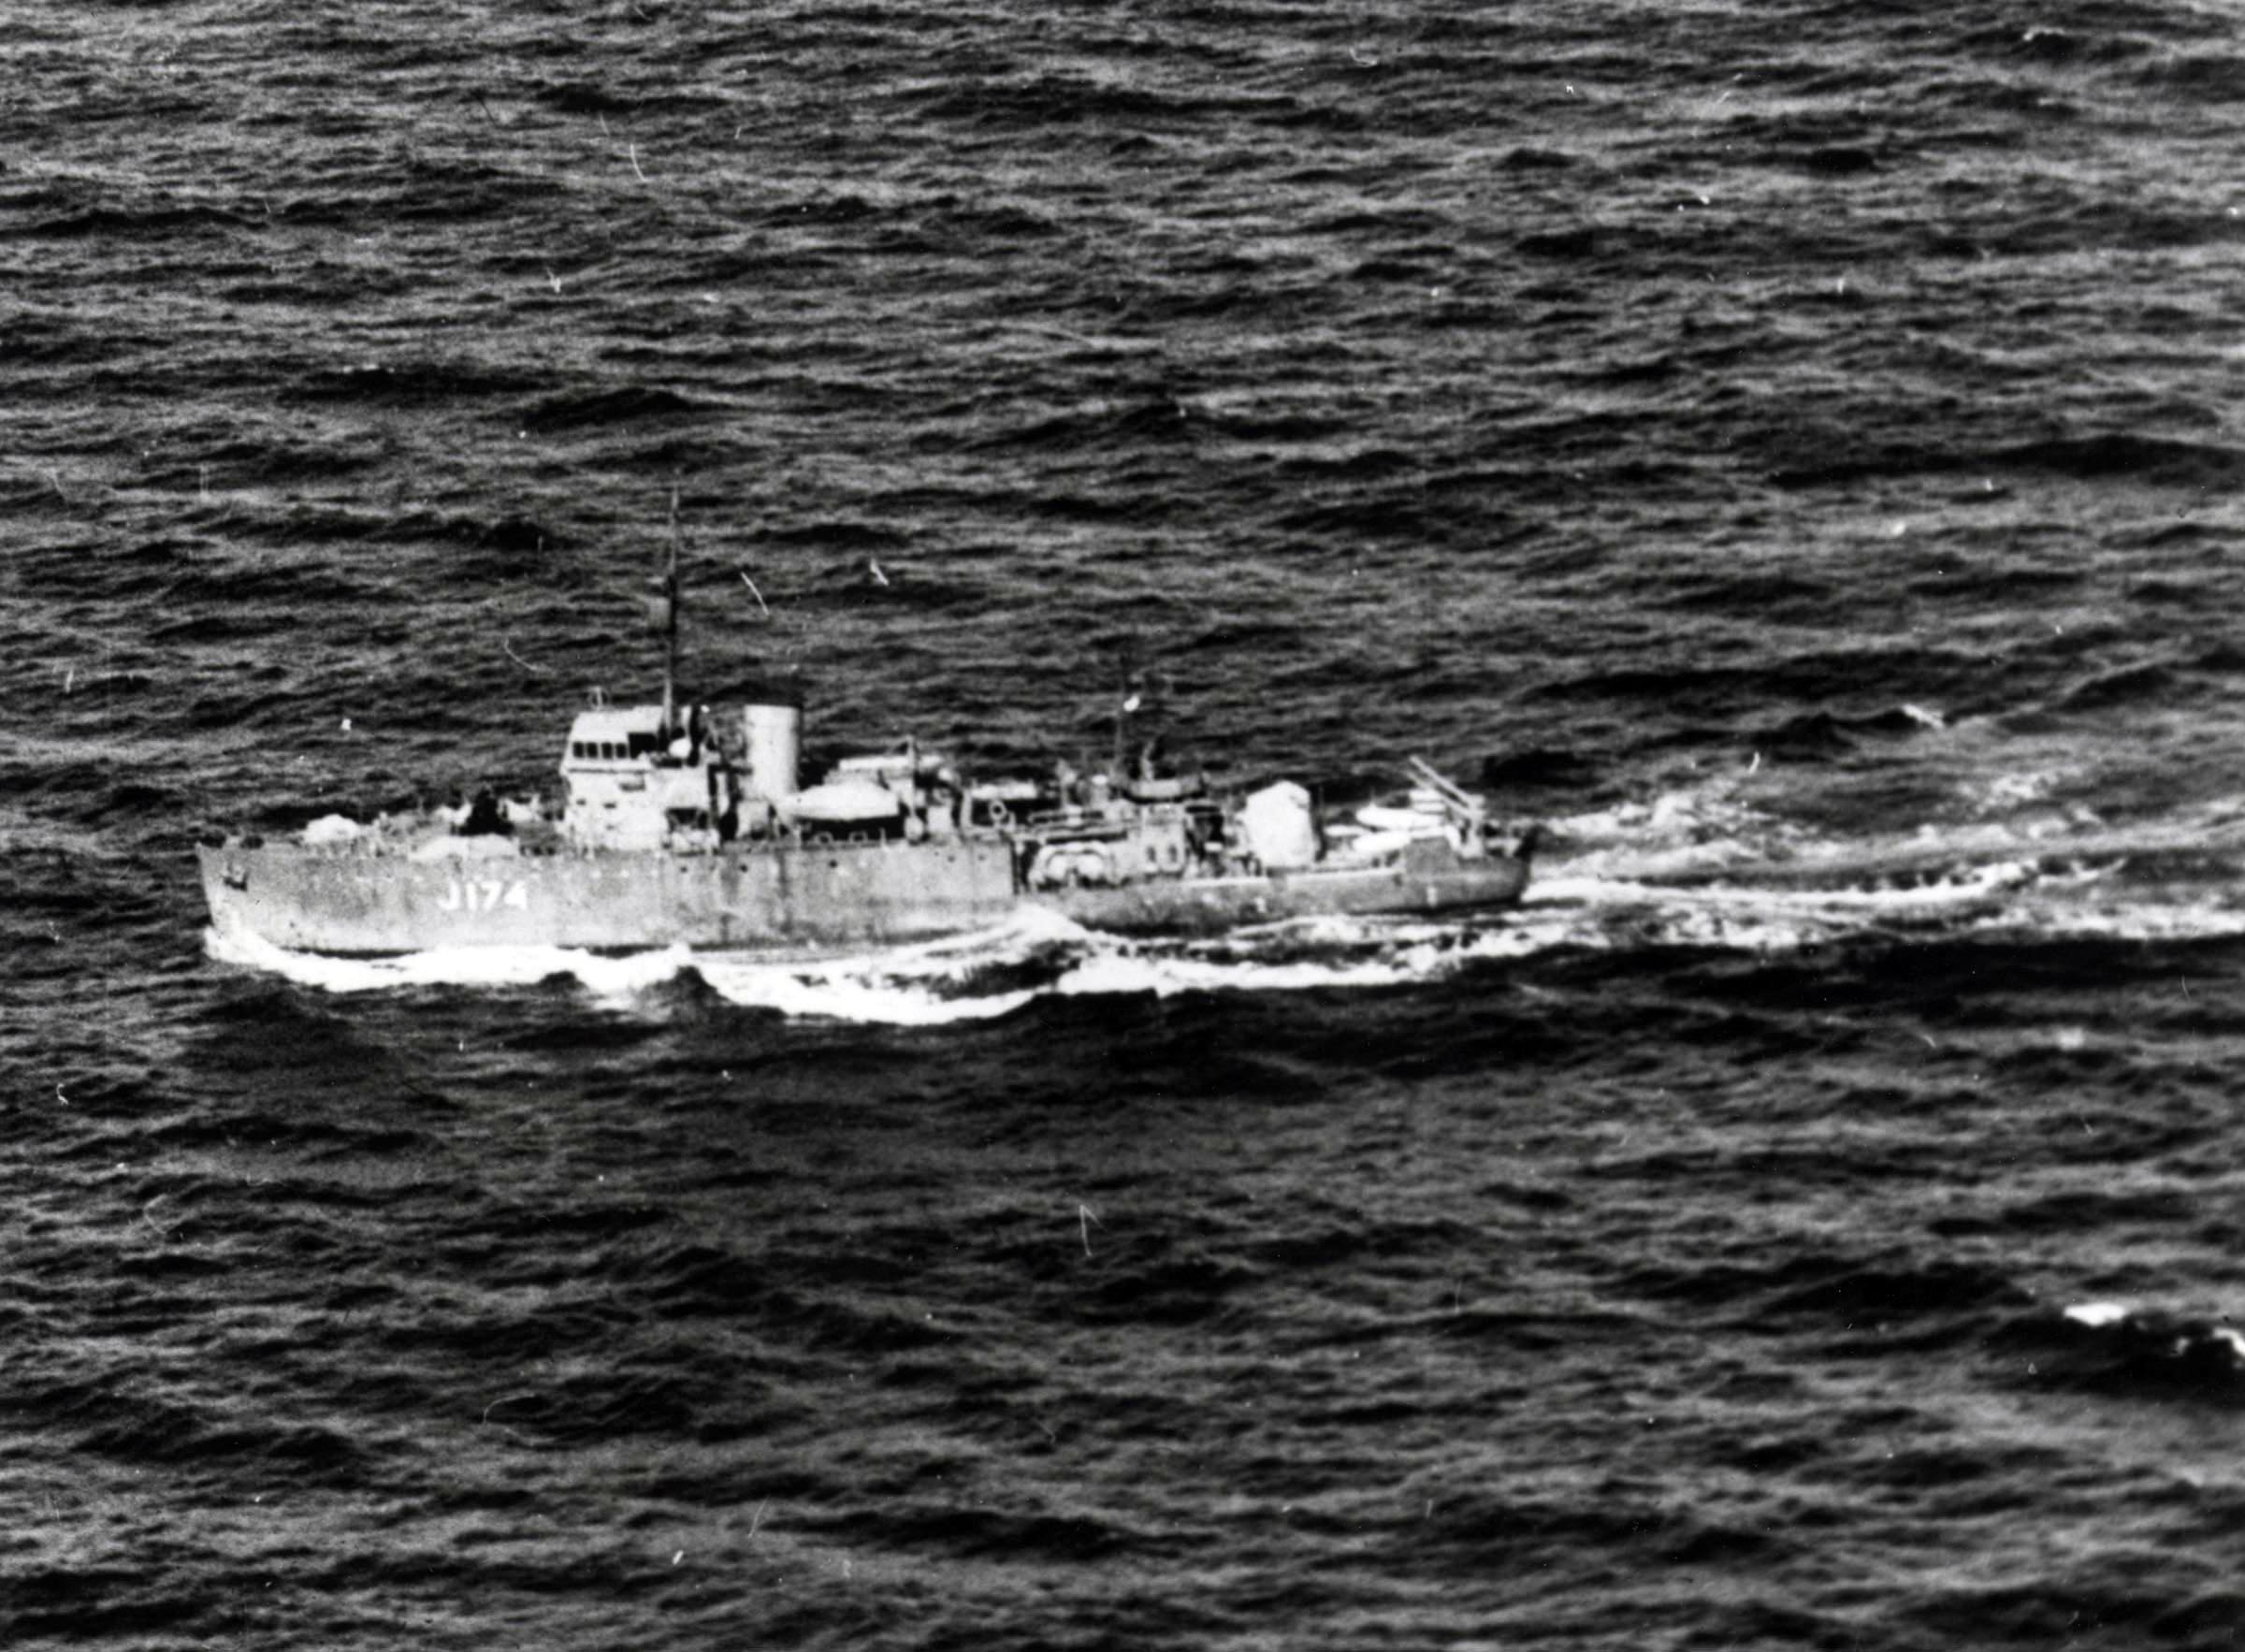 HMCS CLAYOQUOT